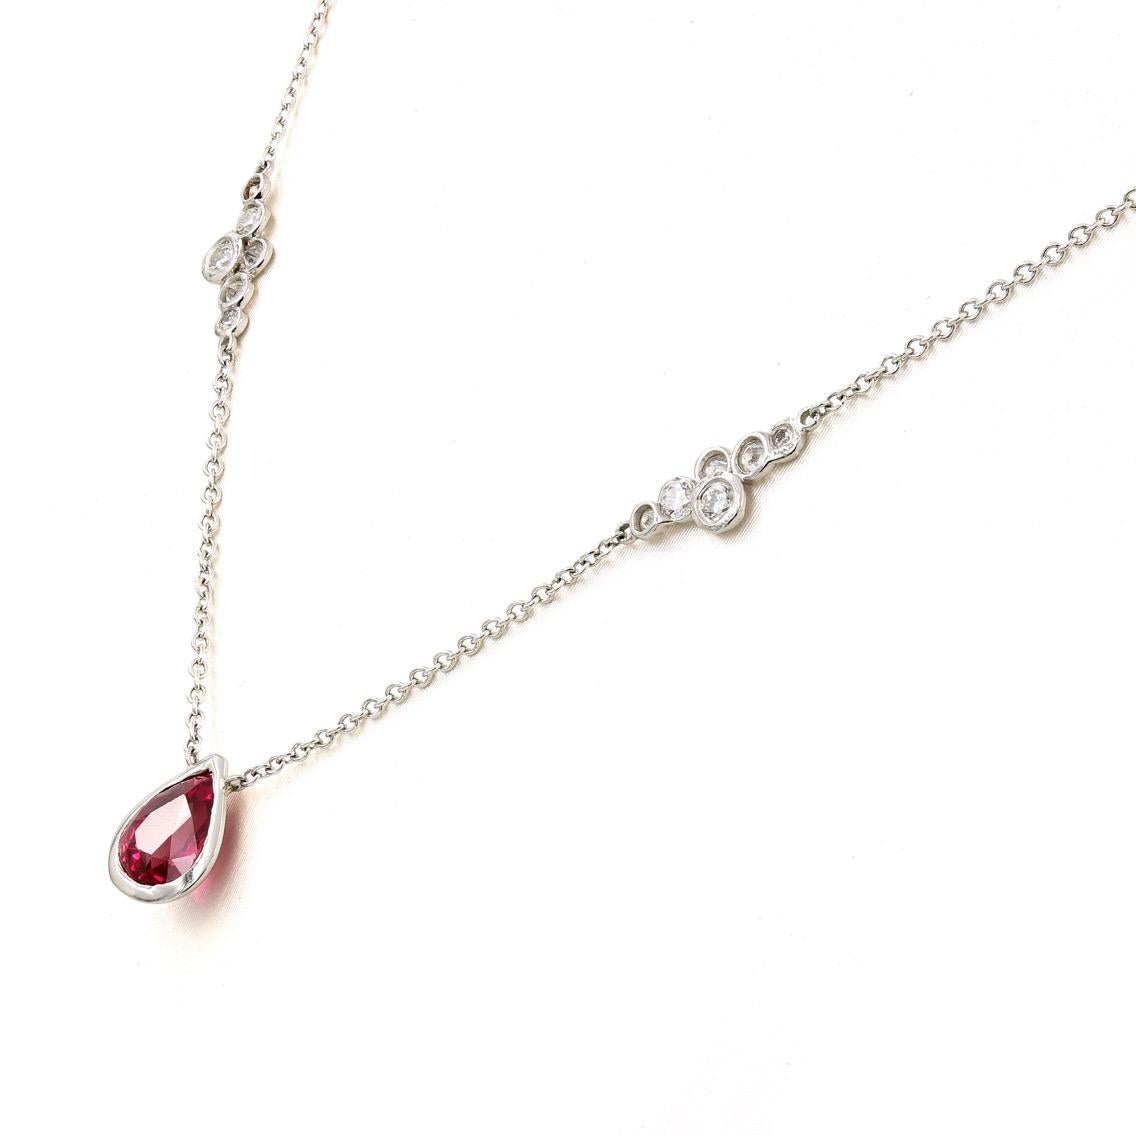 Pear Cut Lester Lampert Original Pirouette Diamond Necklace with Pear Shape Ruby Center